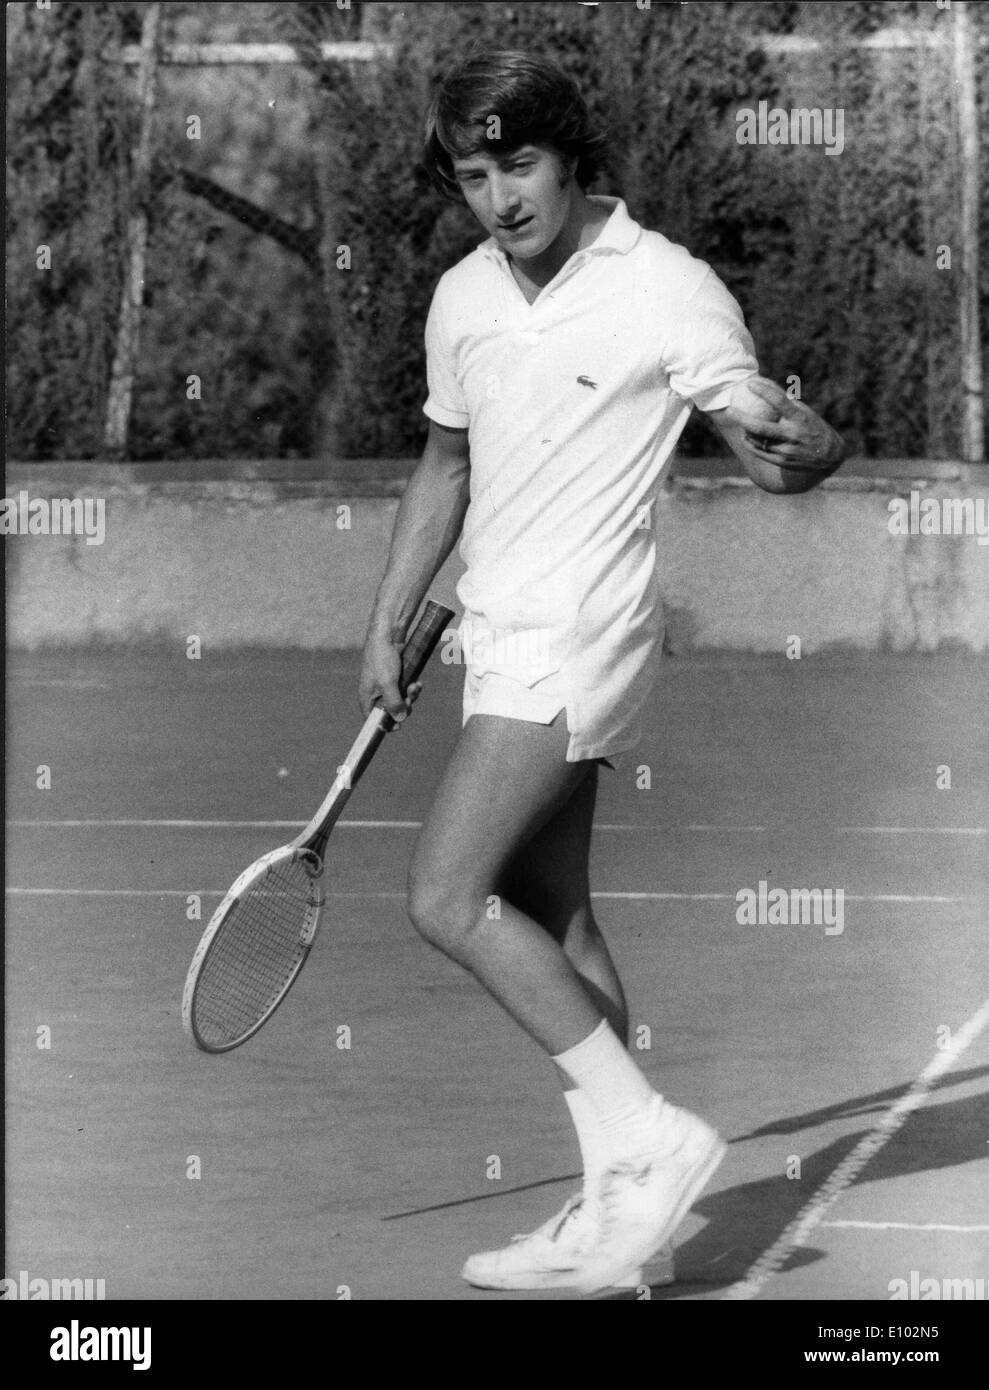 Actor Dustin Hoffman plays tennis Stock Photo - Alamy